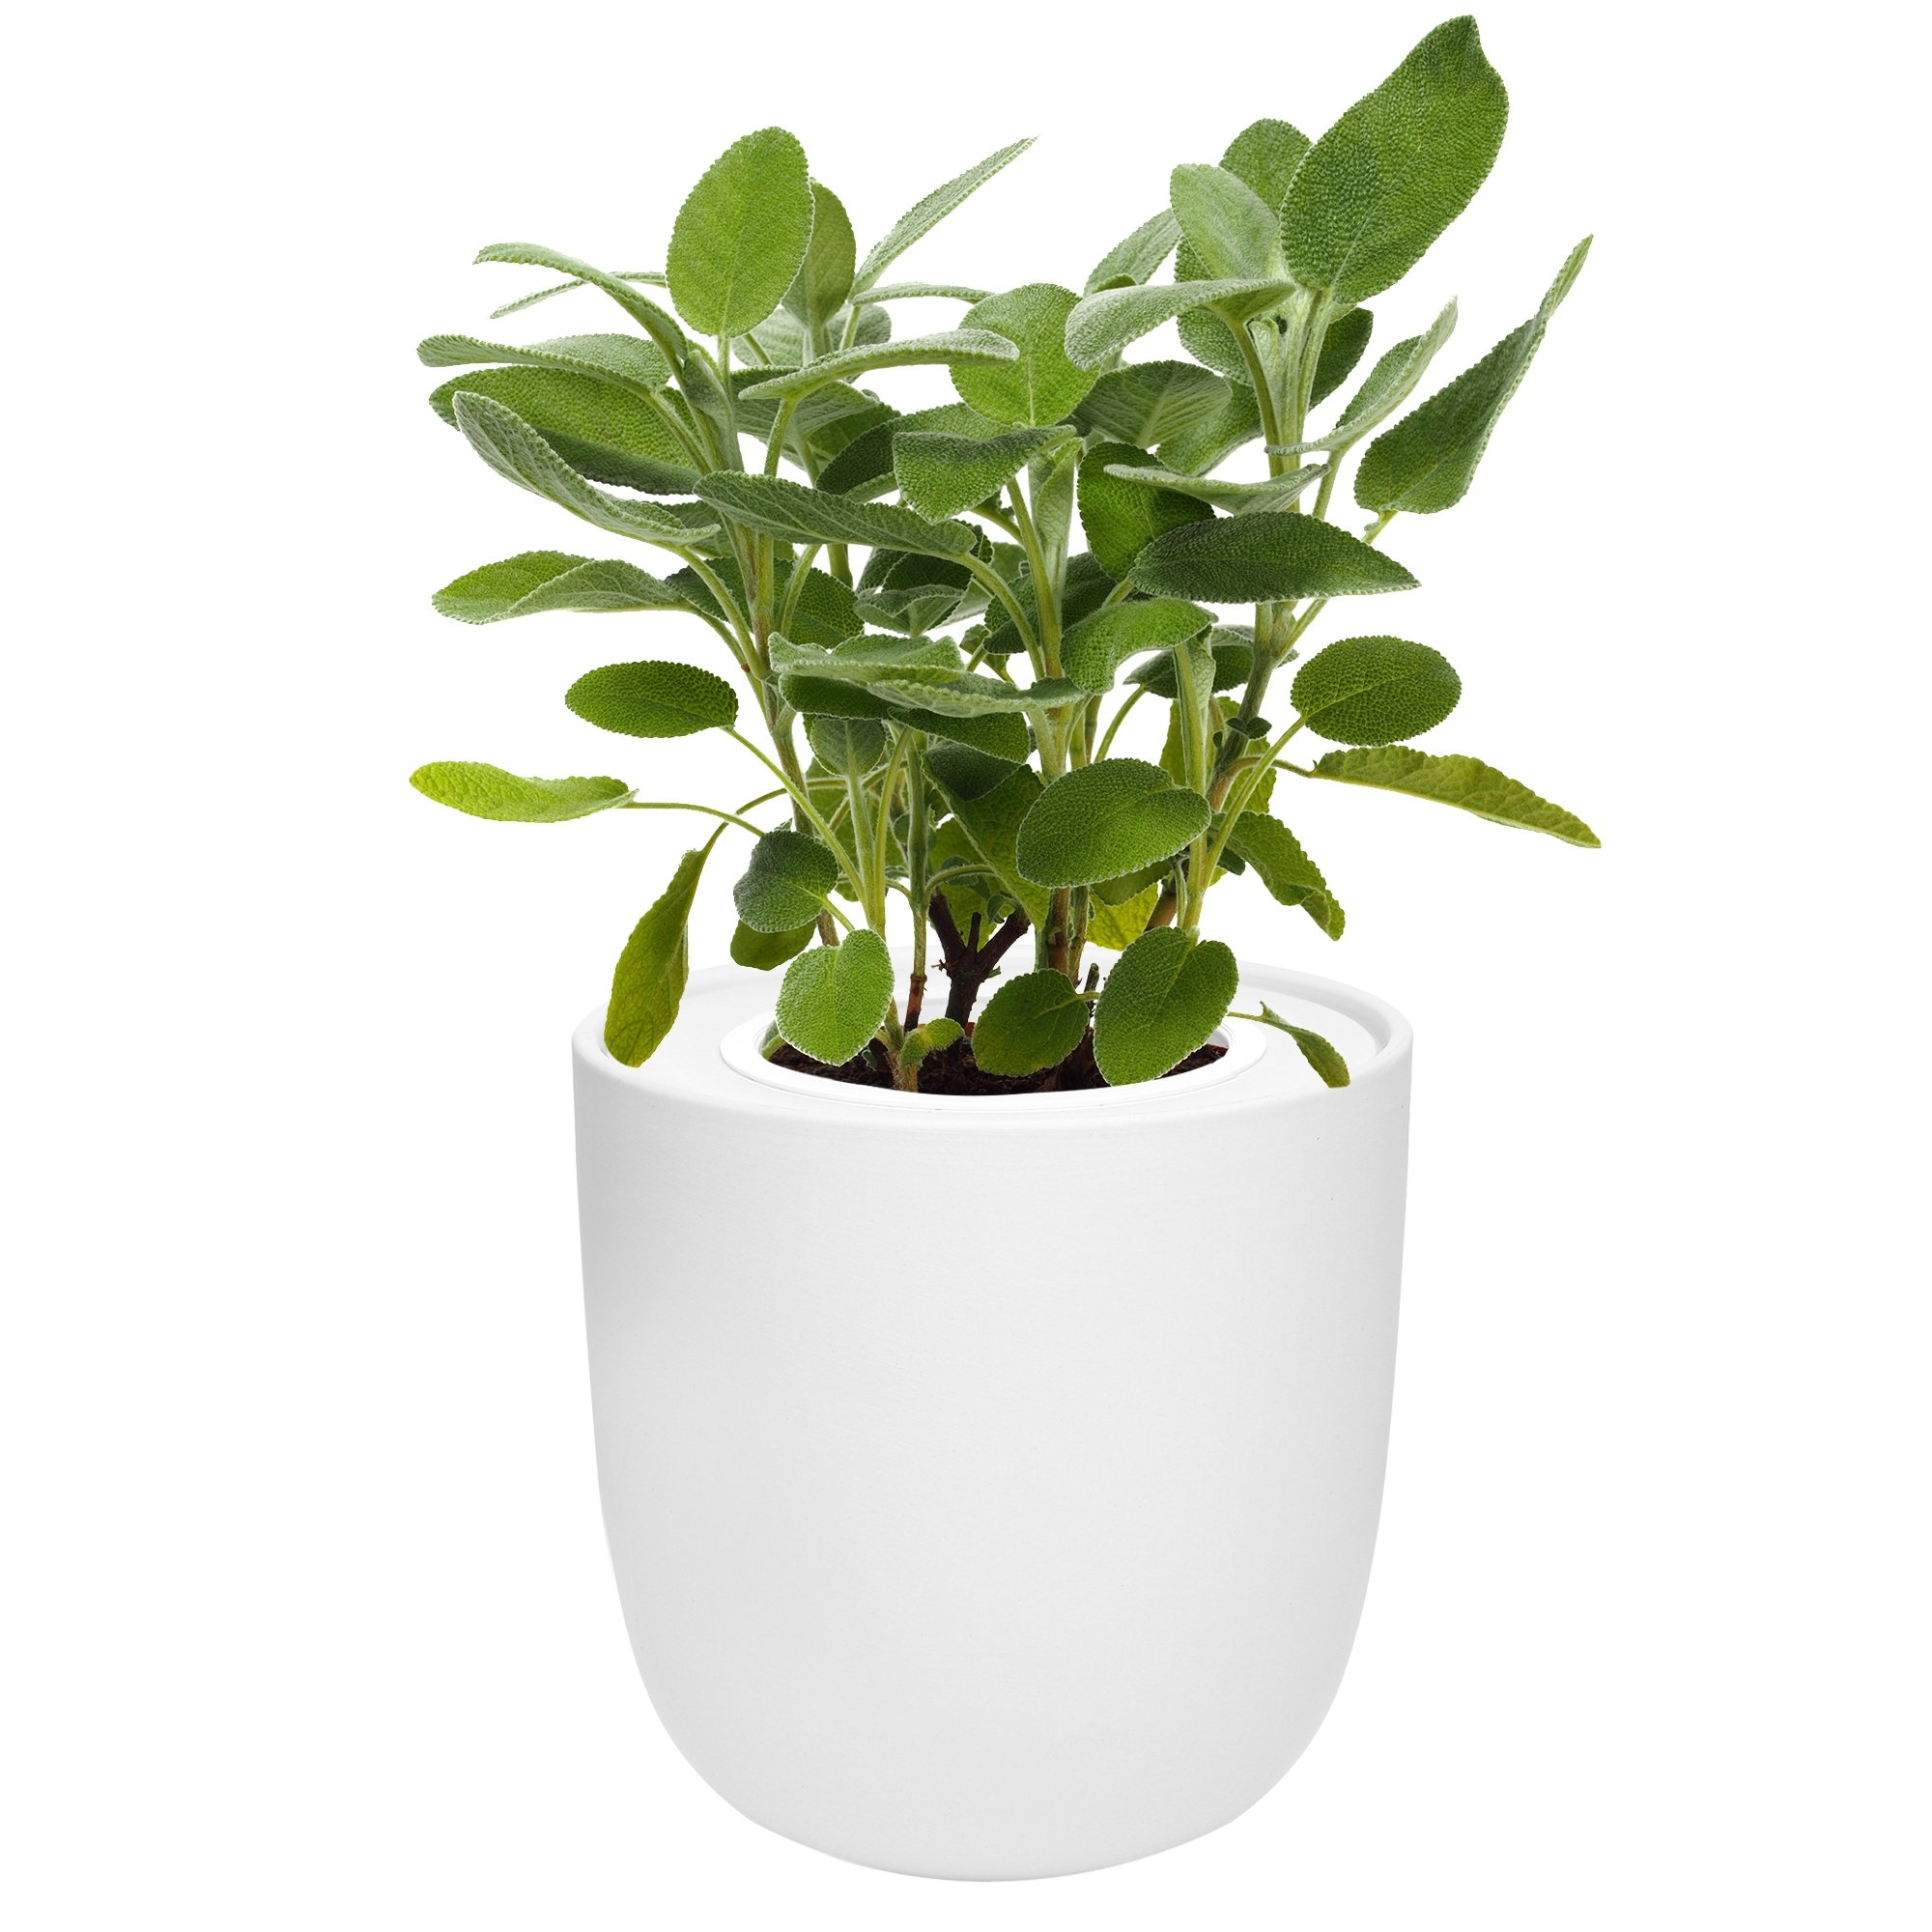 Sage White Ceramic Pot Hydroponic Growing Kit with Organic Seeds